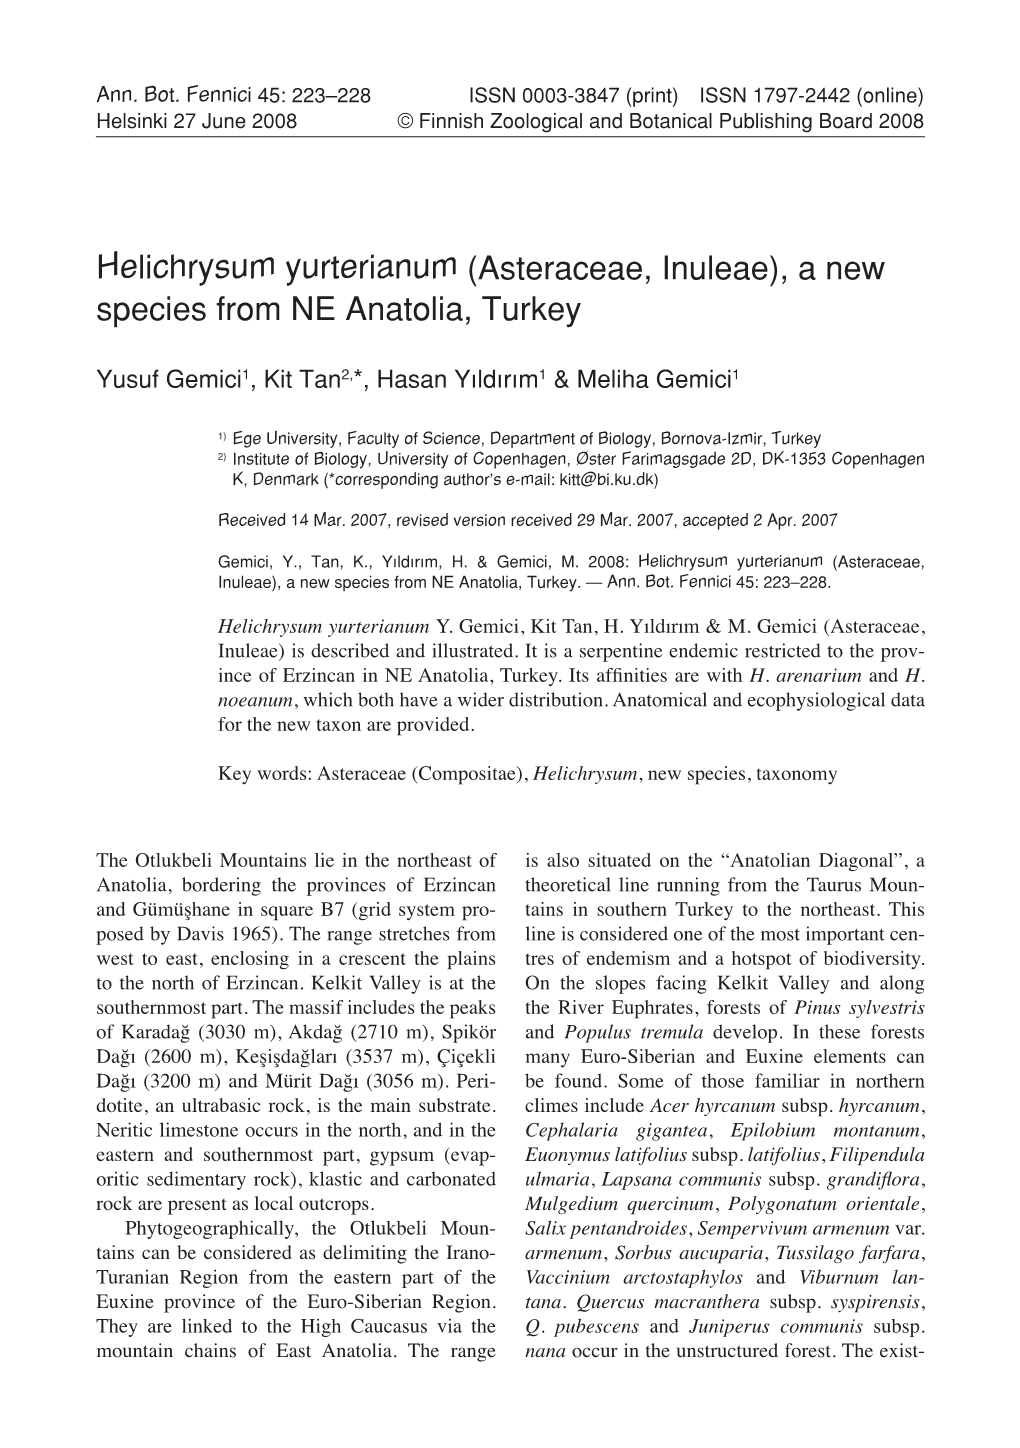 Helichrysum Yurterianum (Asteraceae, Inuleae), a New Species from NE Anatolia, Turkey